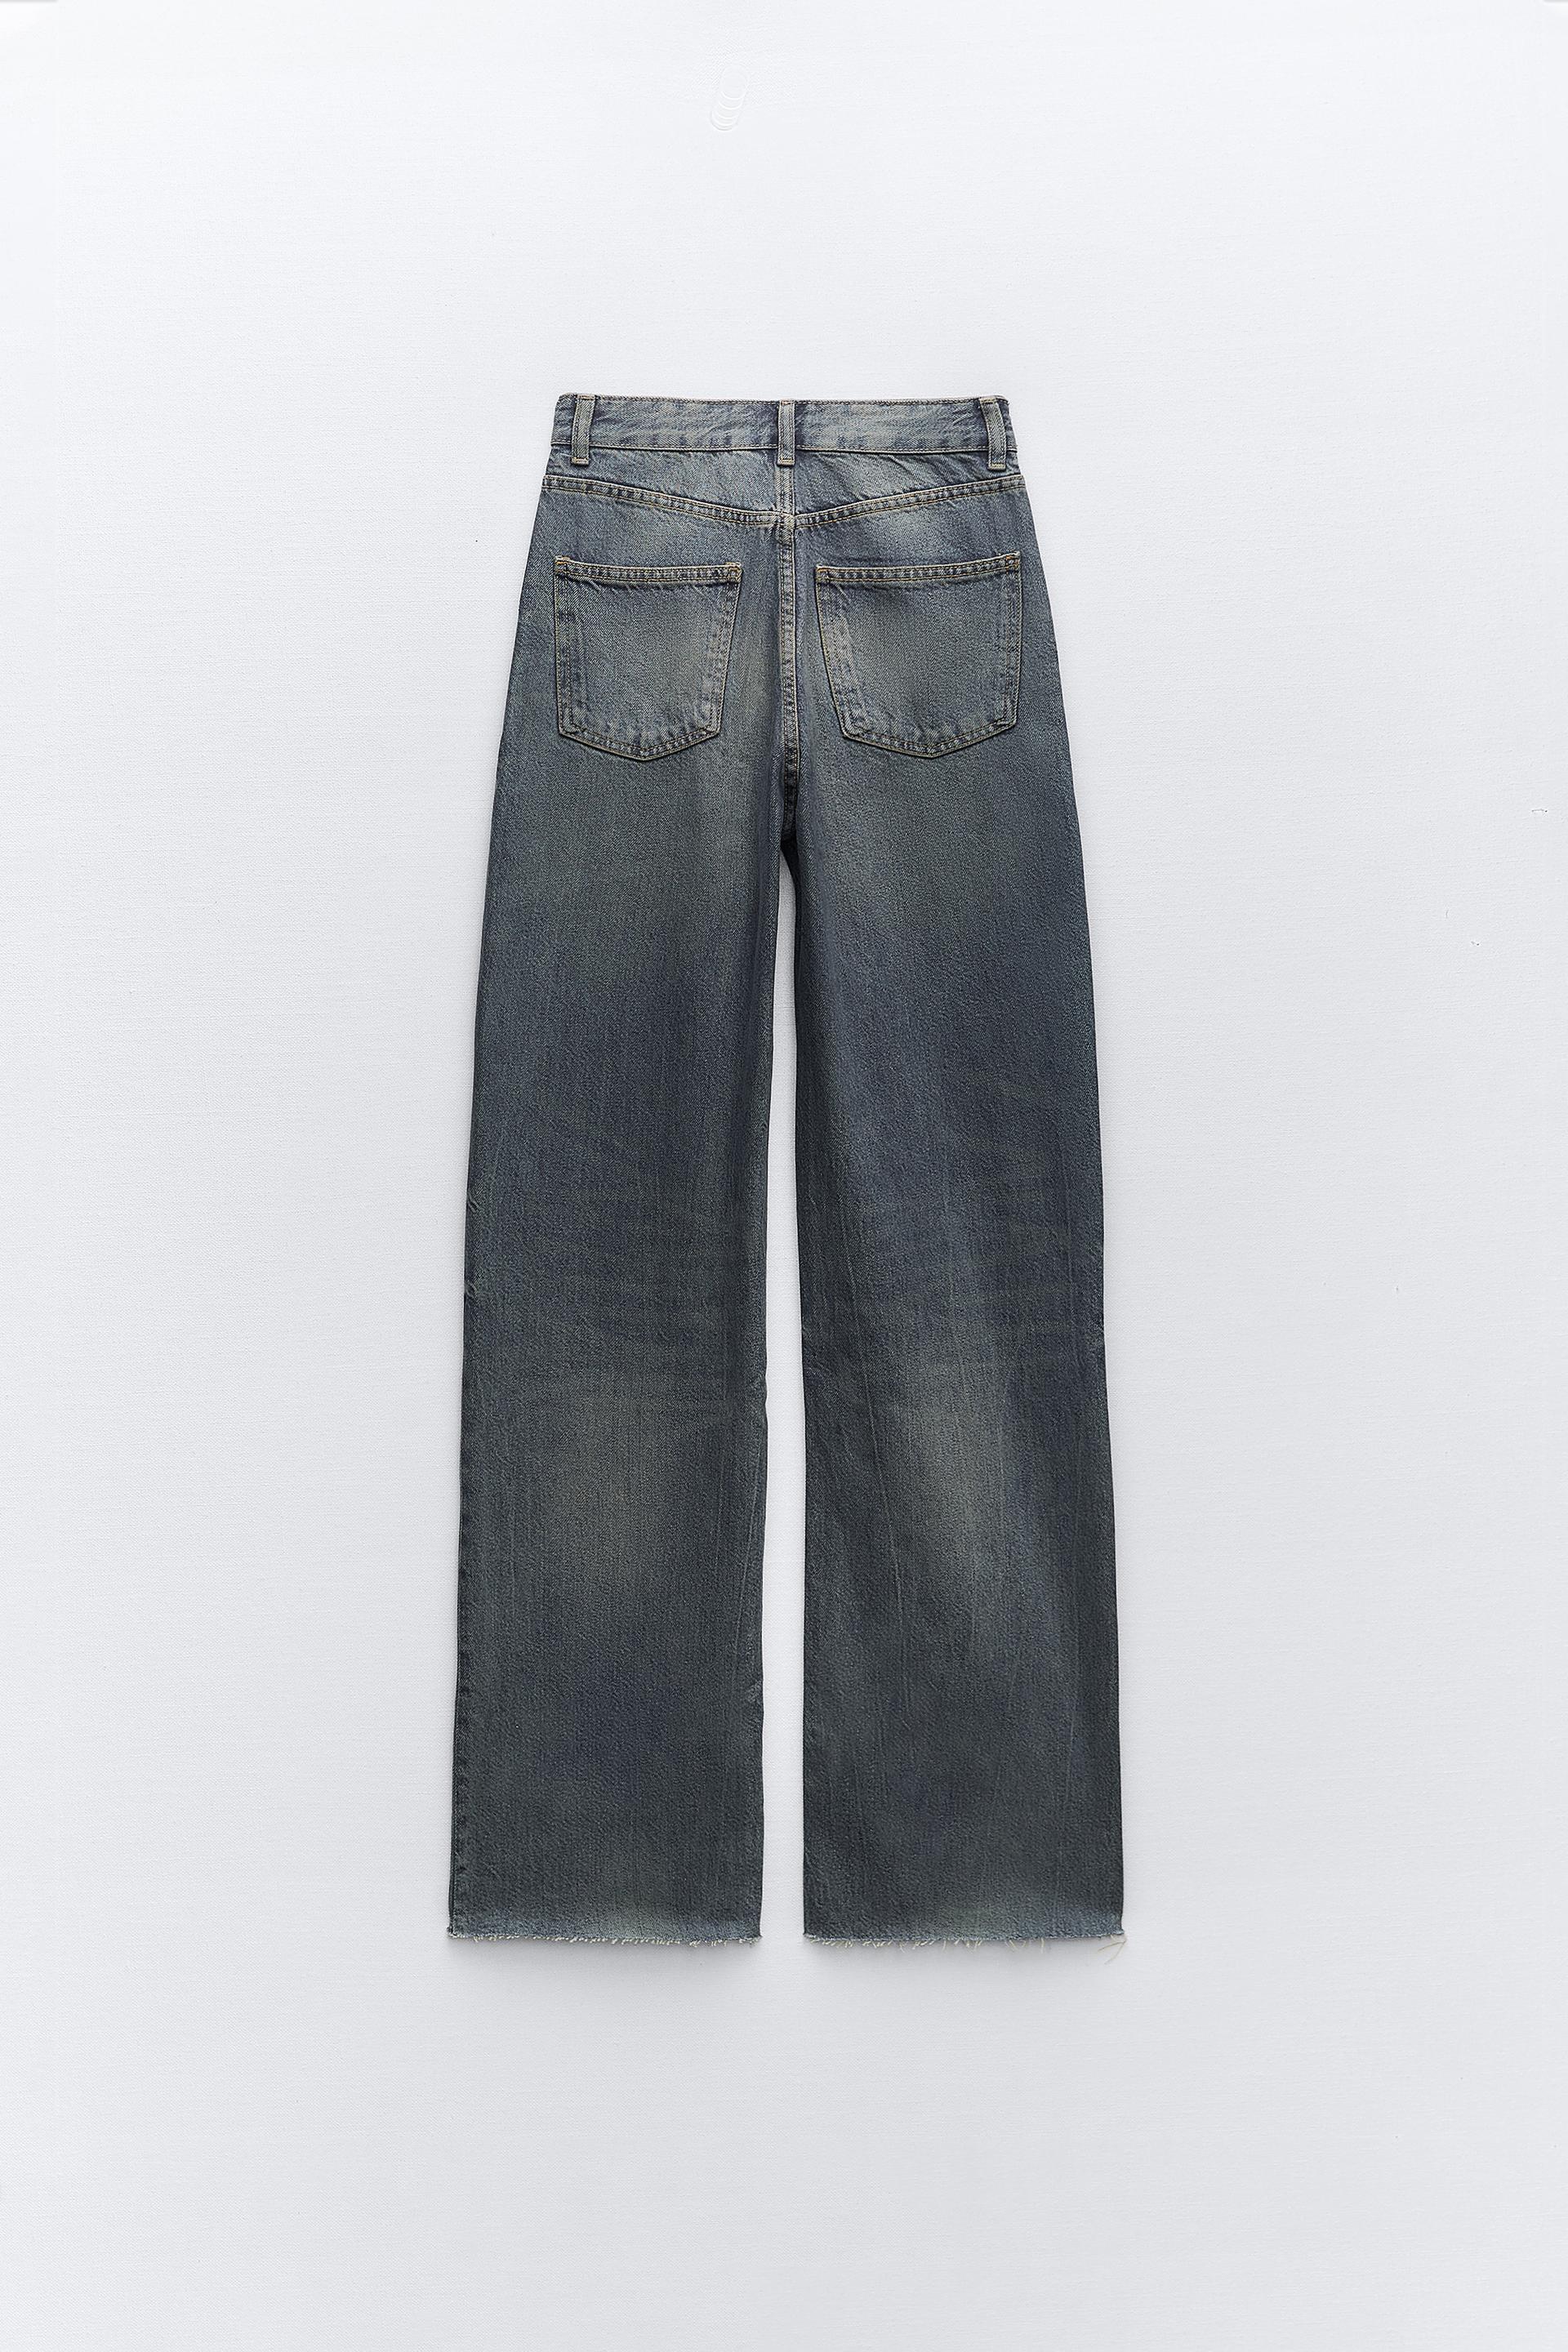 SEVEN7 woman's jeans high rise RAFAELLA 2958824 VERDEBLK 98% cotton 2%  elastan